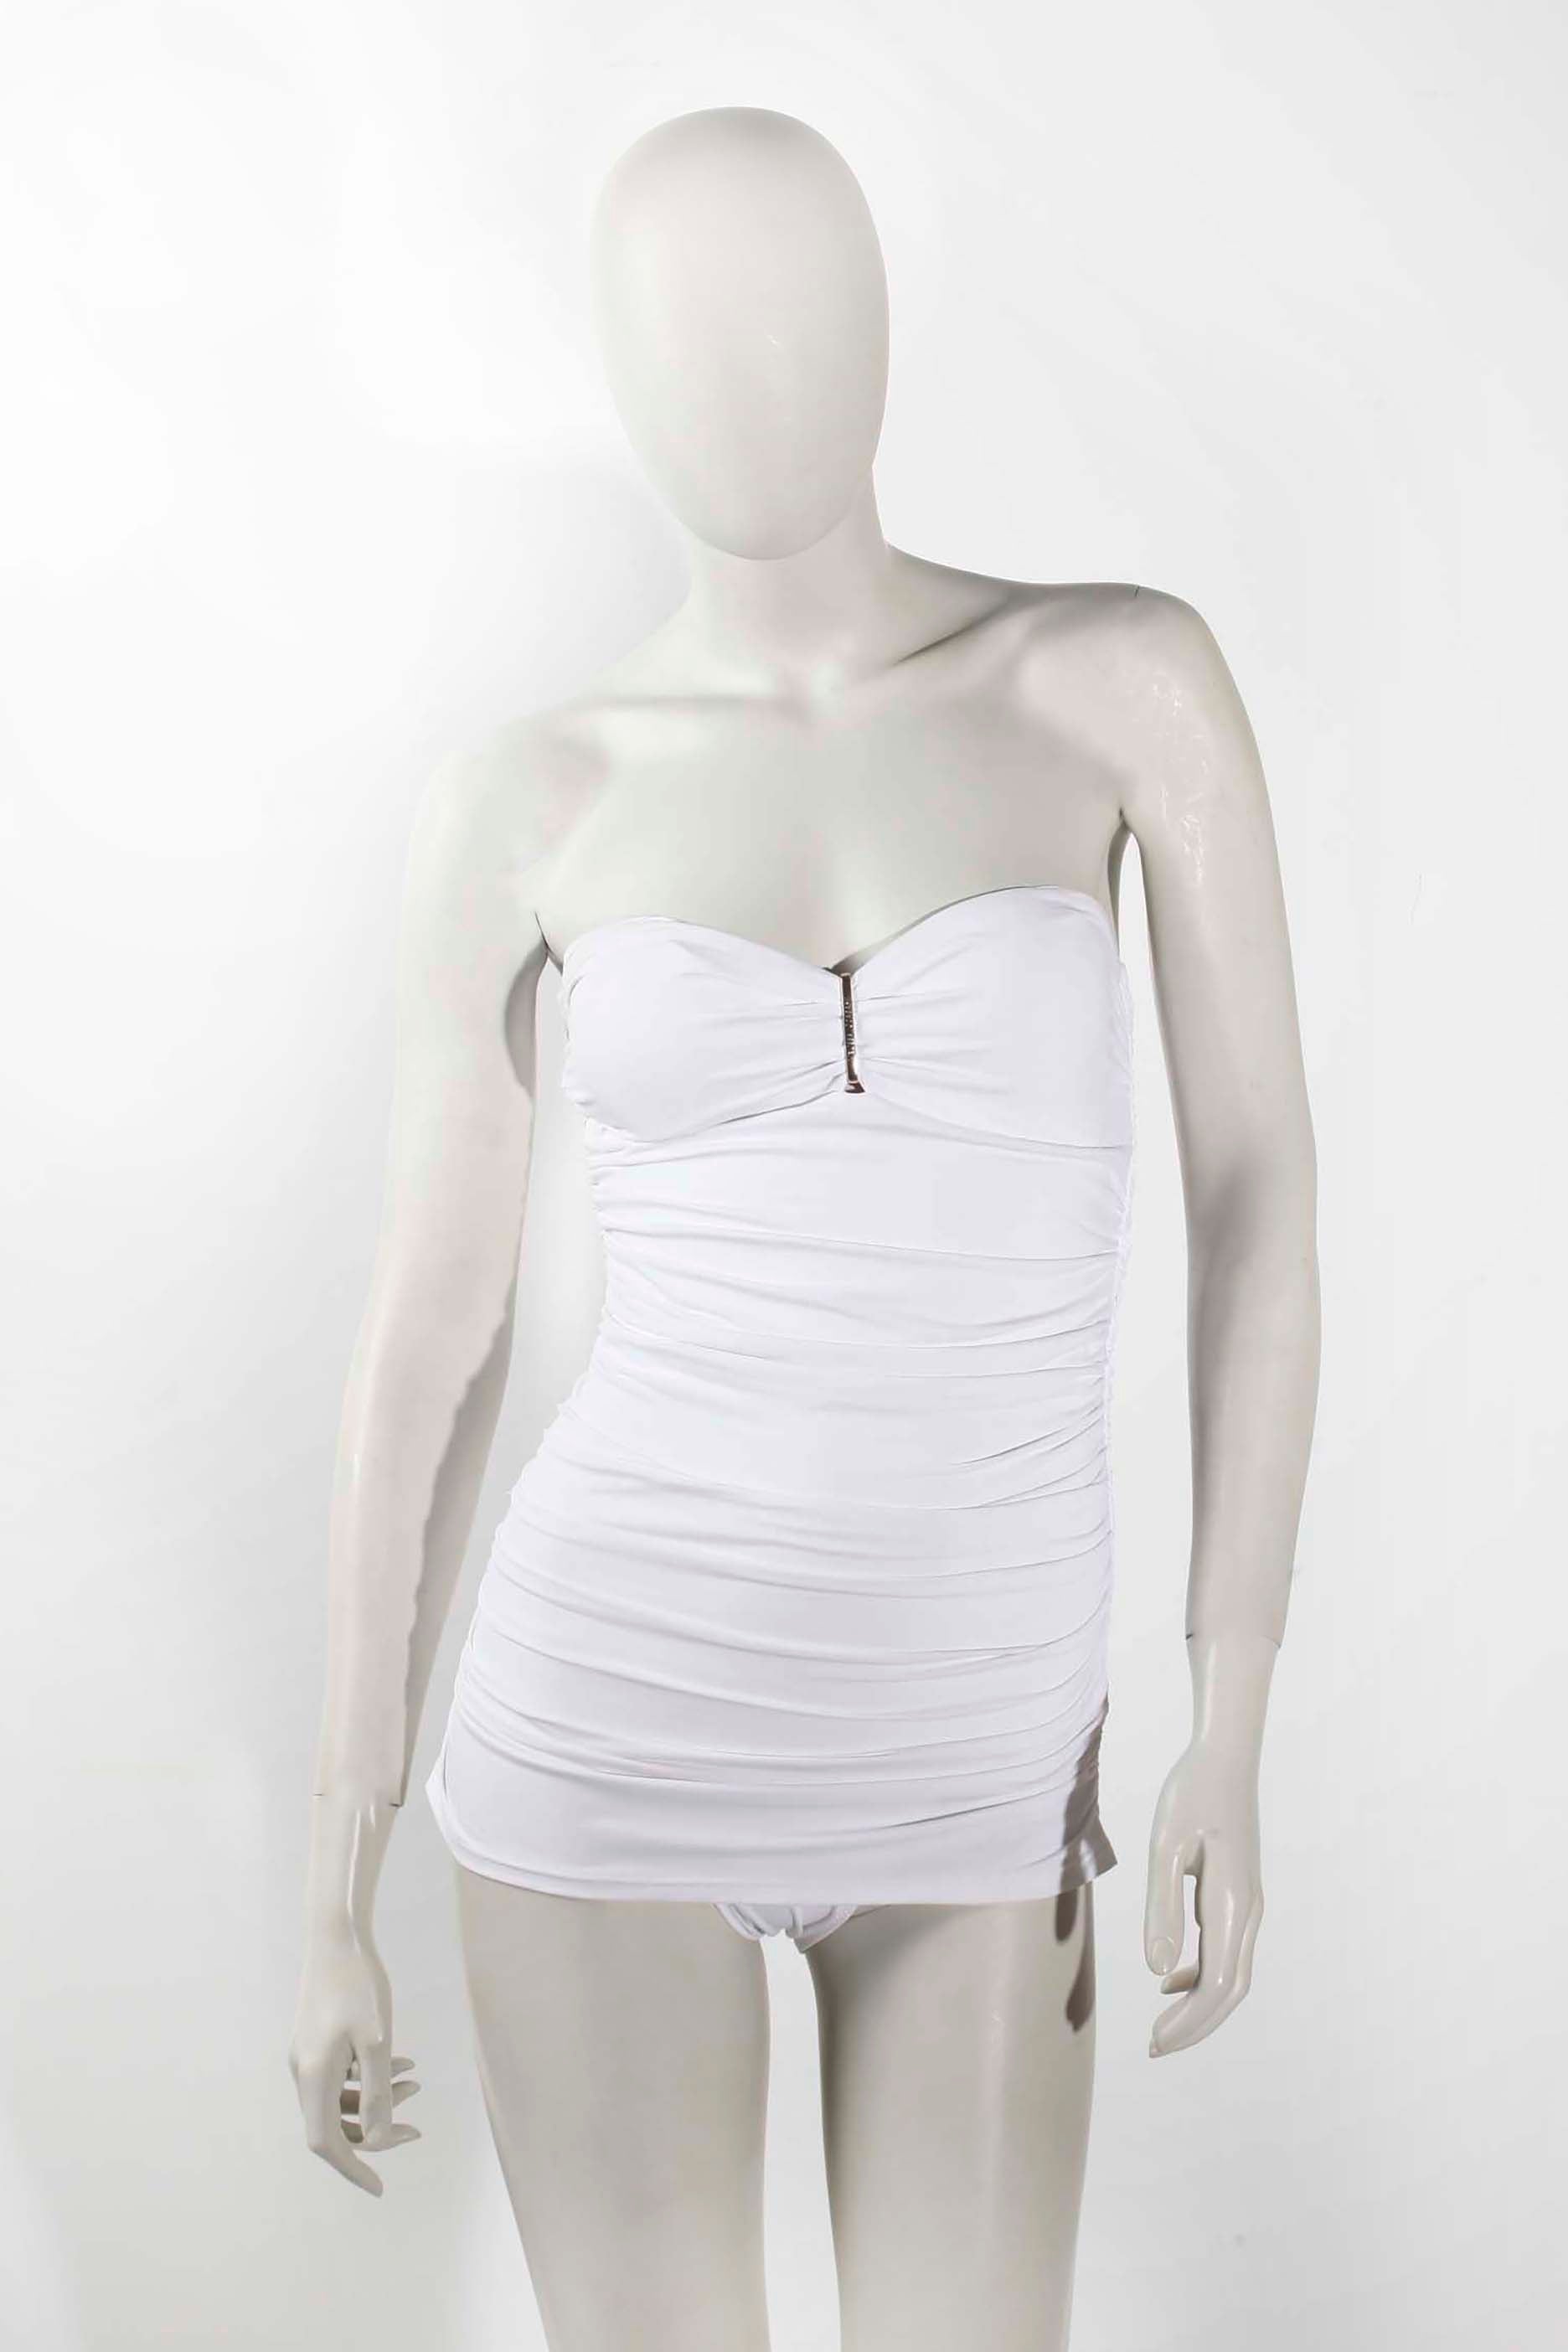 Retro White Swimsuit with Halterneck Straps (Small)